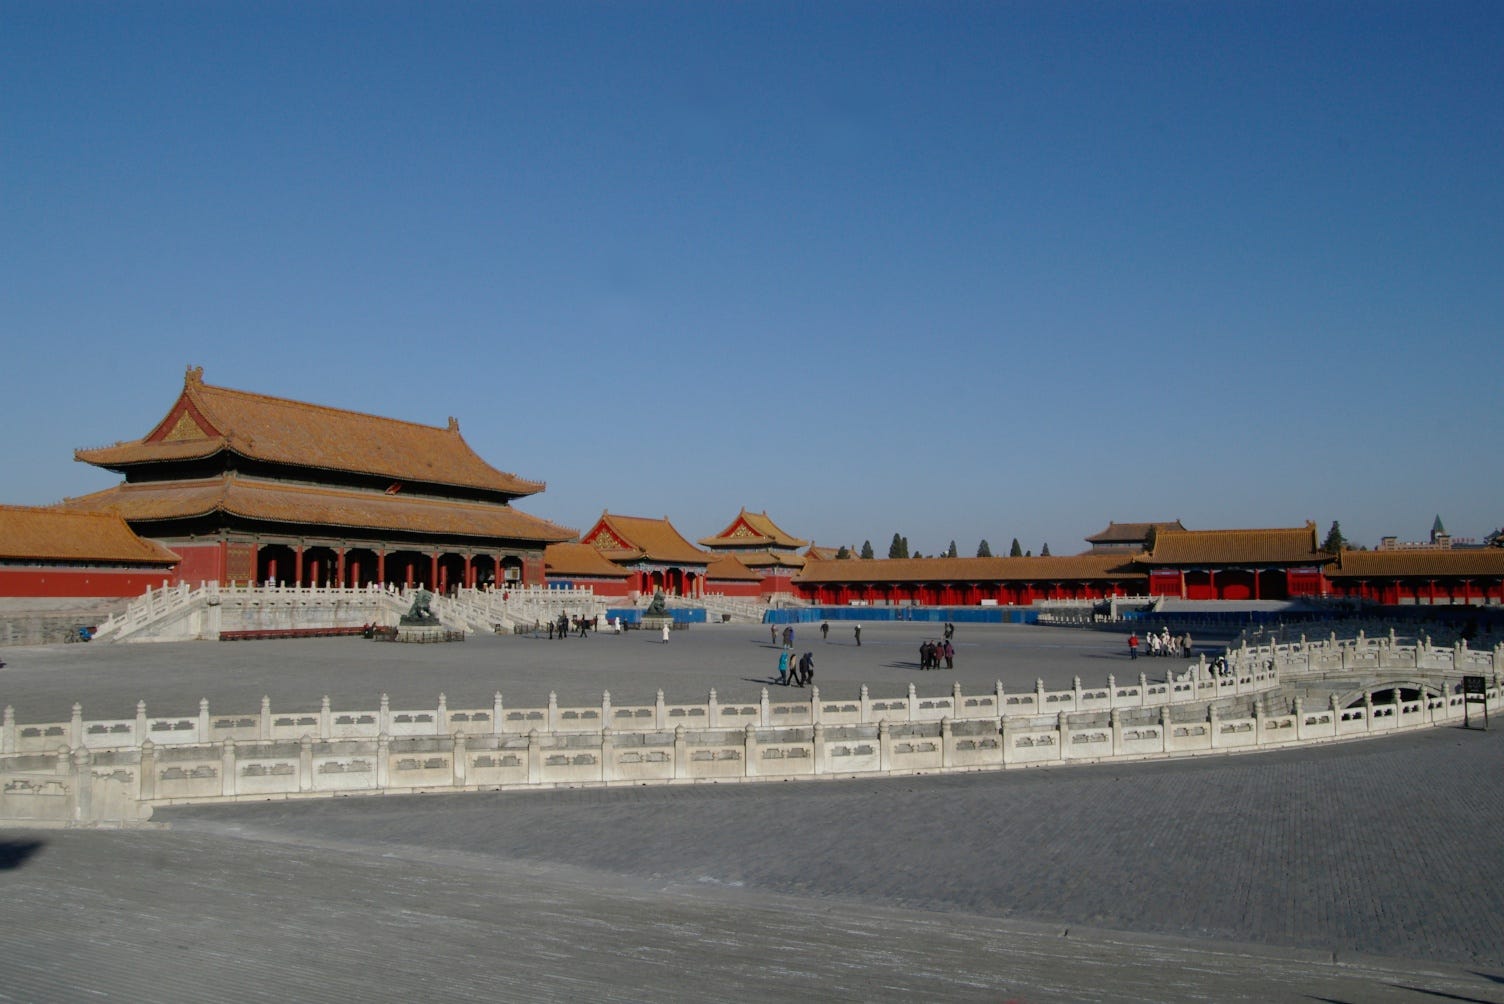 5 Ways of Looking at China's Forbidden City